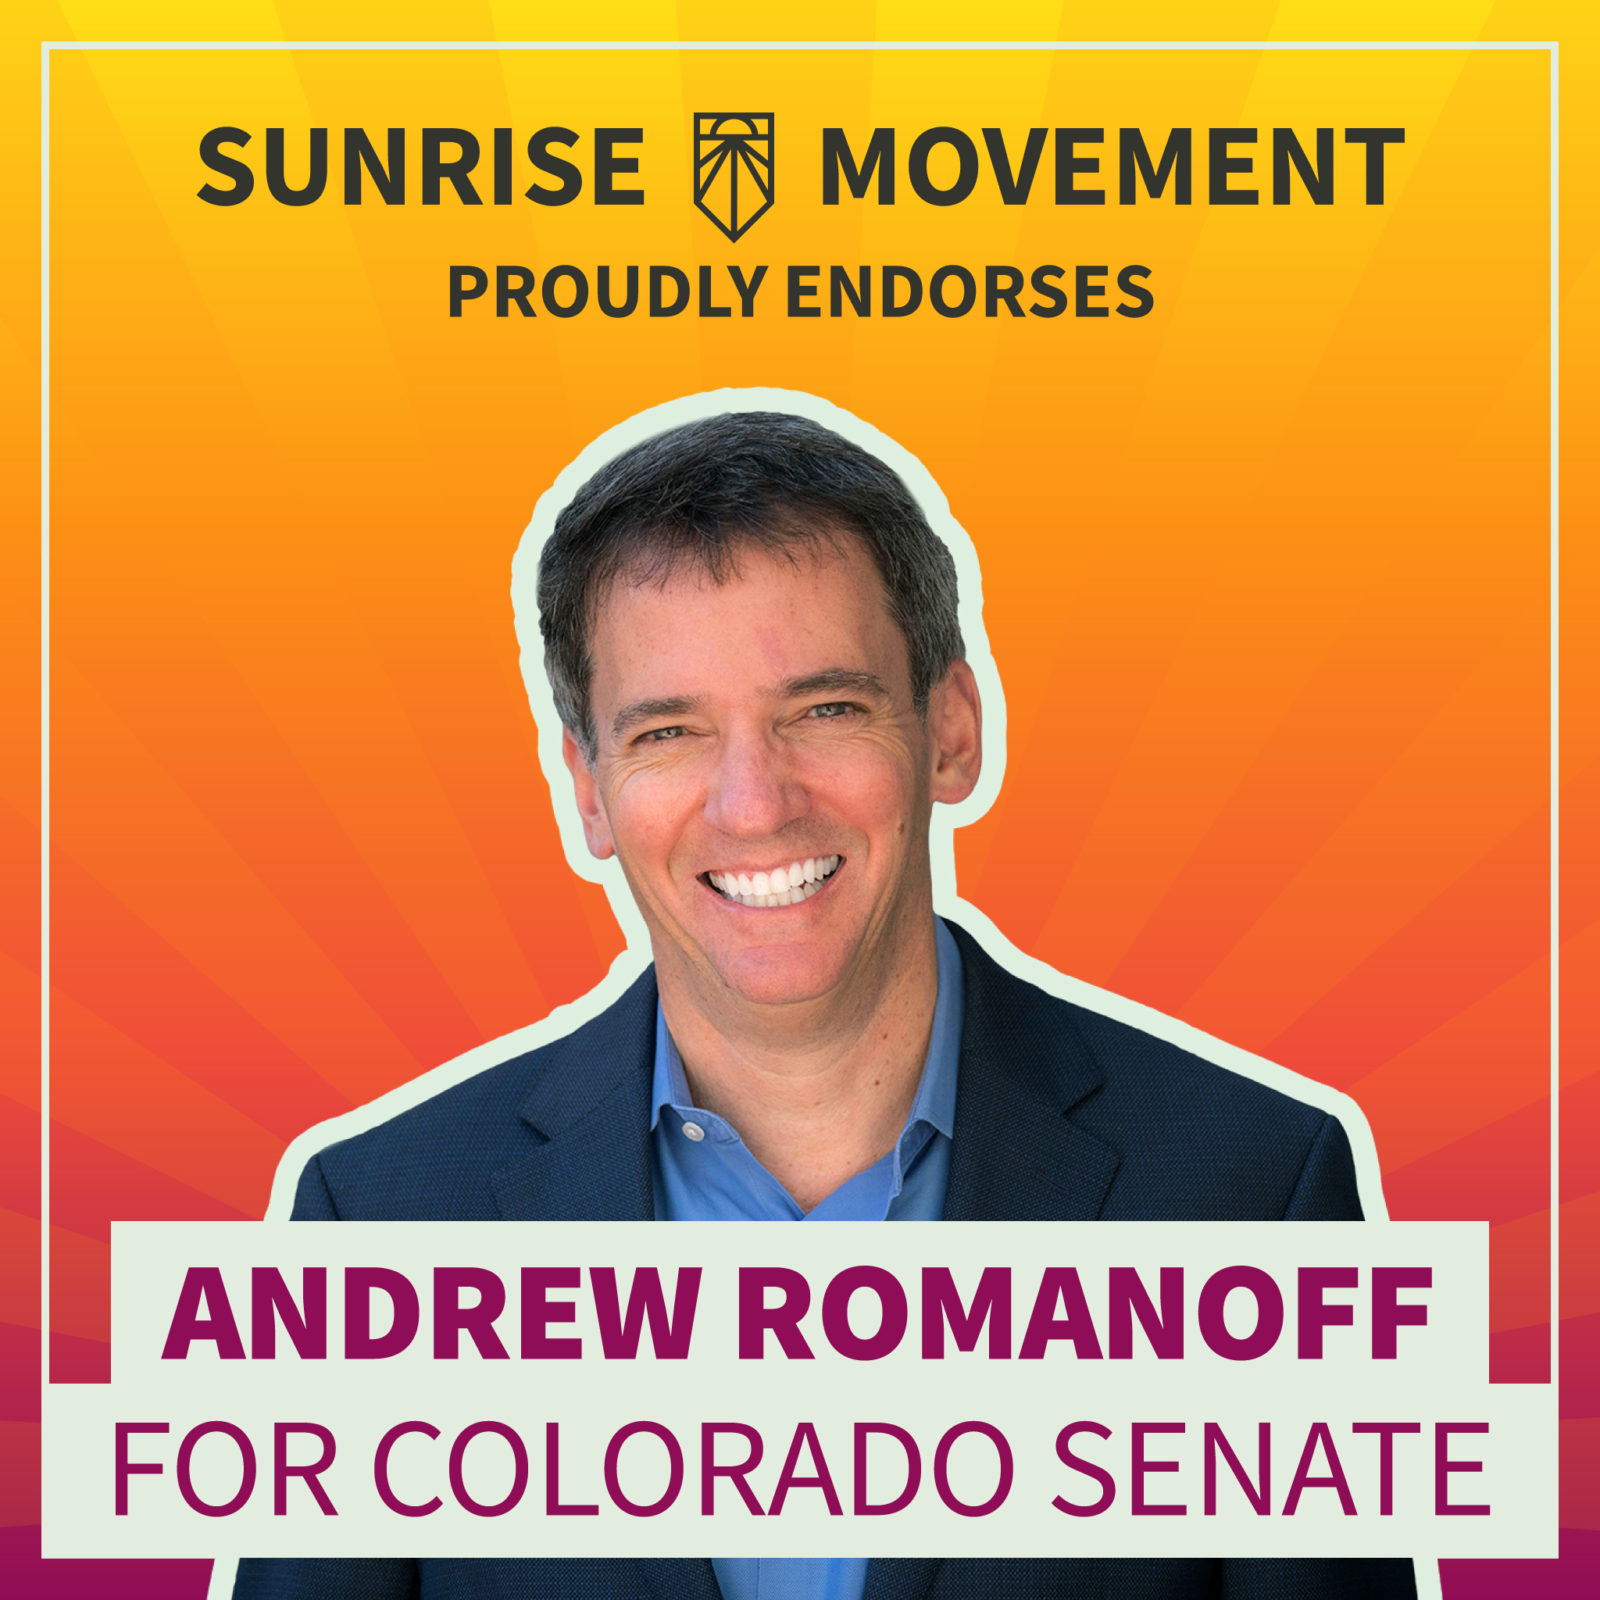 A photo of Andrew Romanoff with text: Sunrise Movement proudly endorses Andrew Romanoff for Colorado Senate